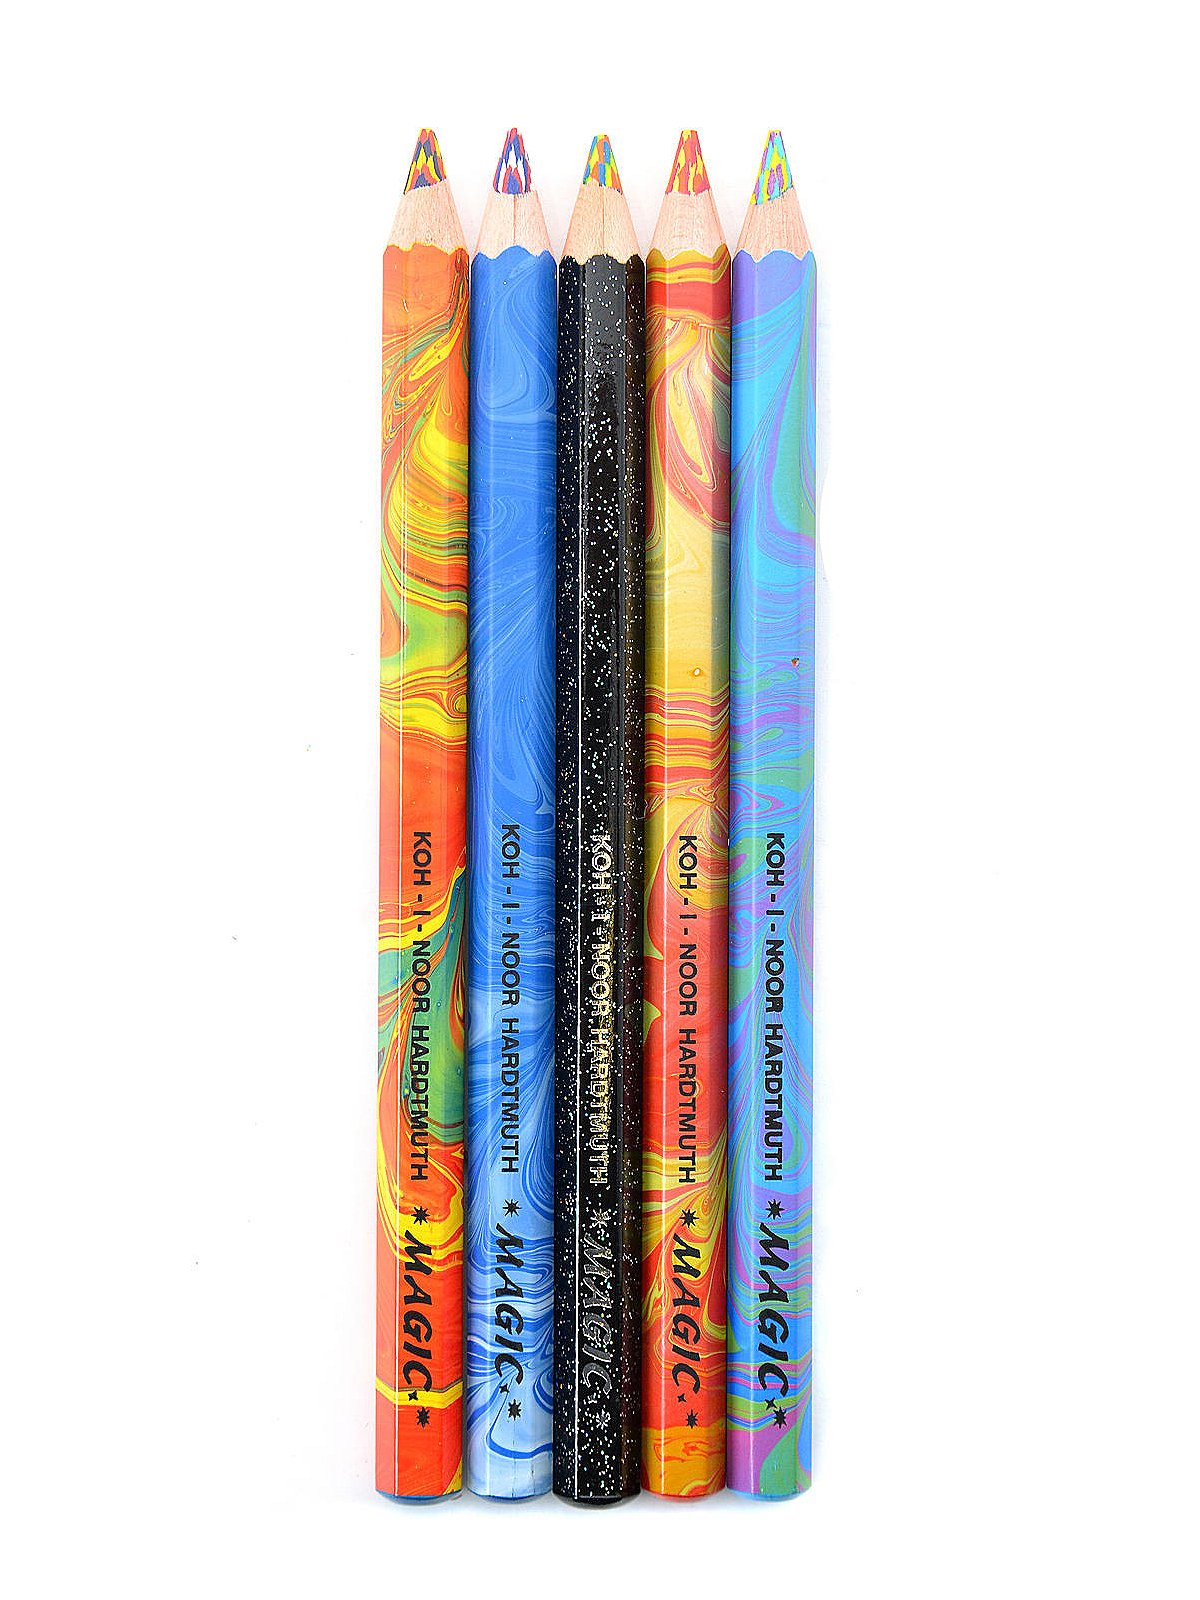 Colored Pencils Cosmetic Pencils by THE CRAYON CASE